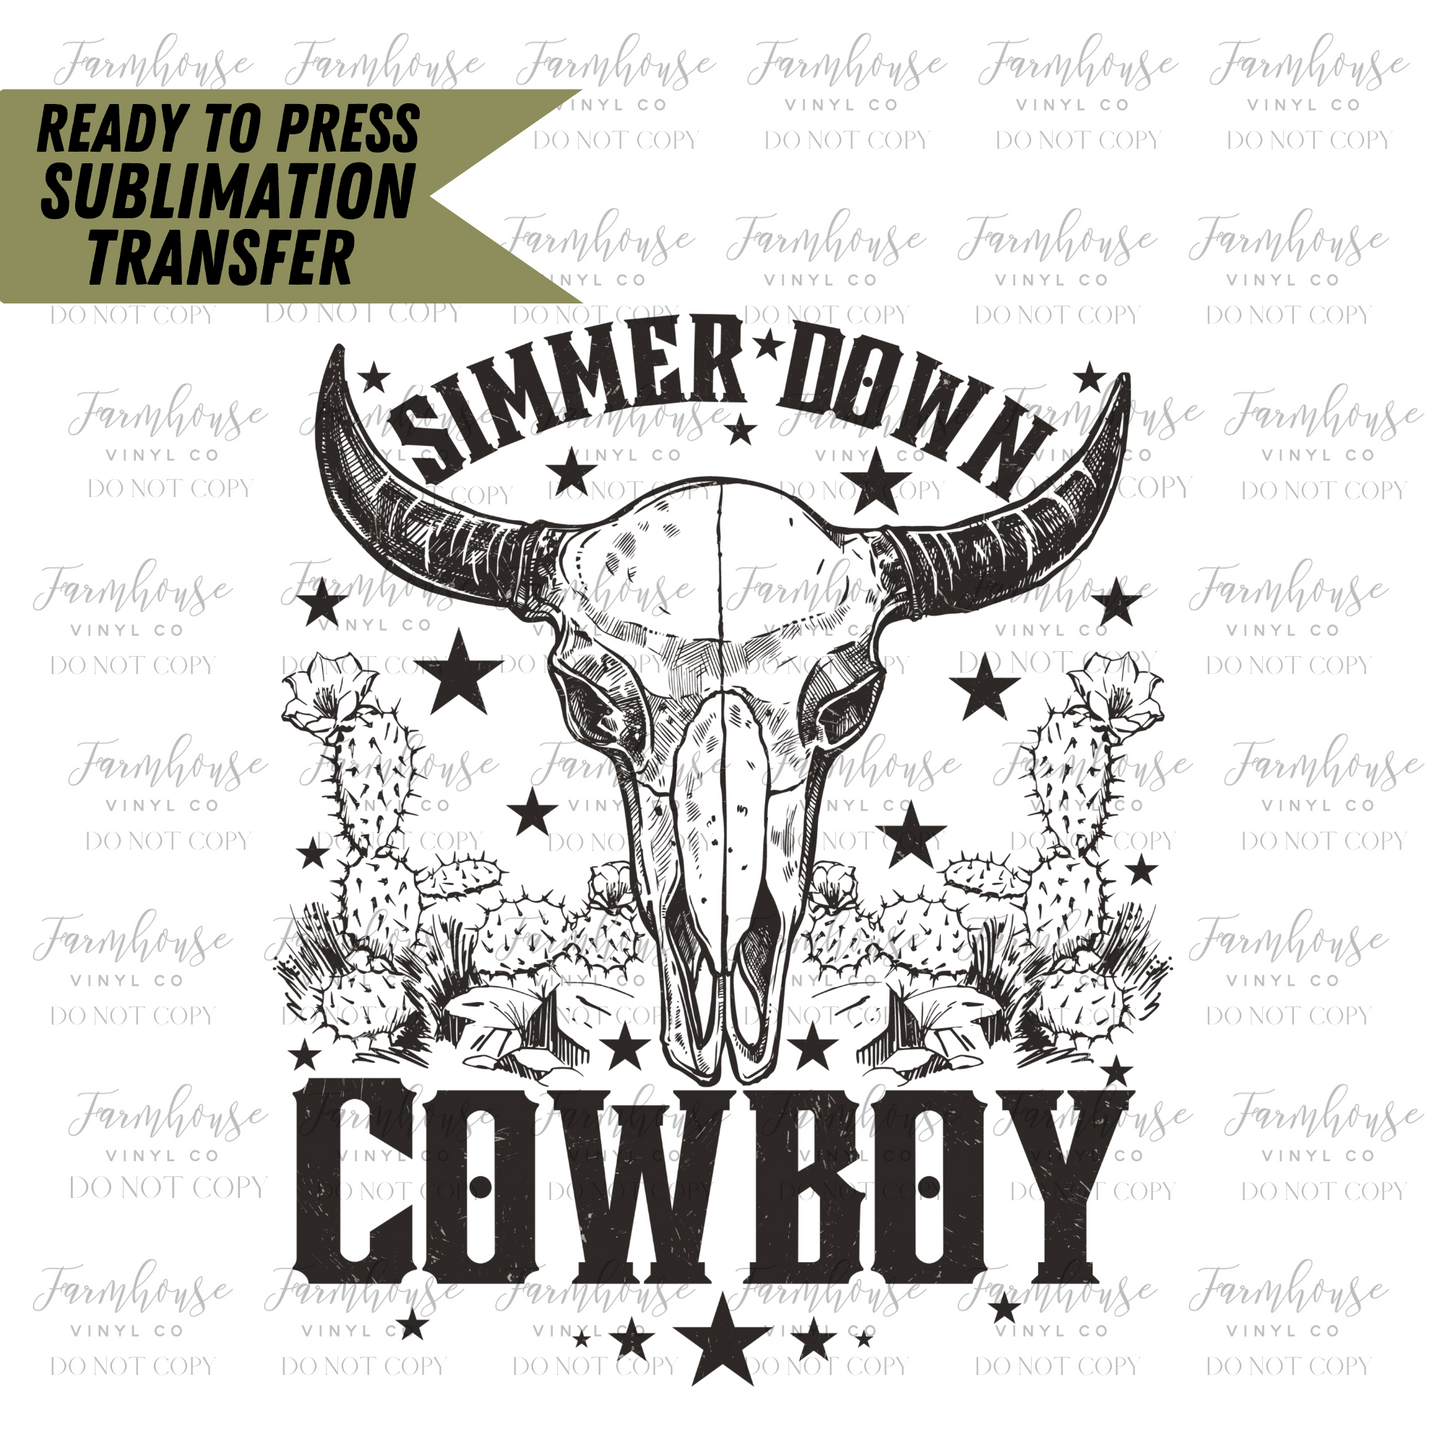 Simmer Down Cowboy Ready To Press Sublimation Transfer - Farmhouse Vinyl Co